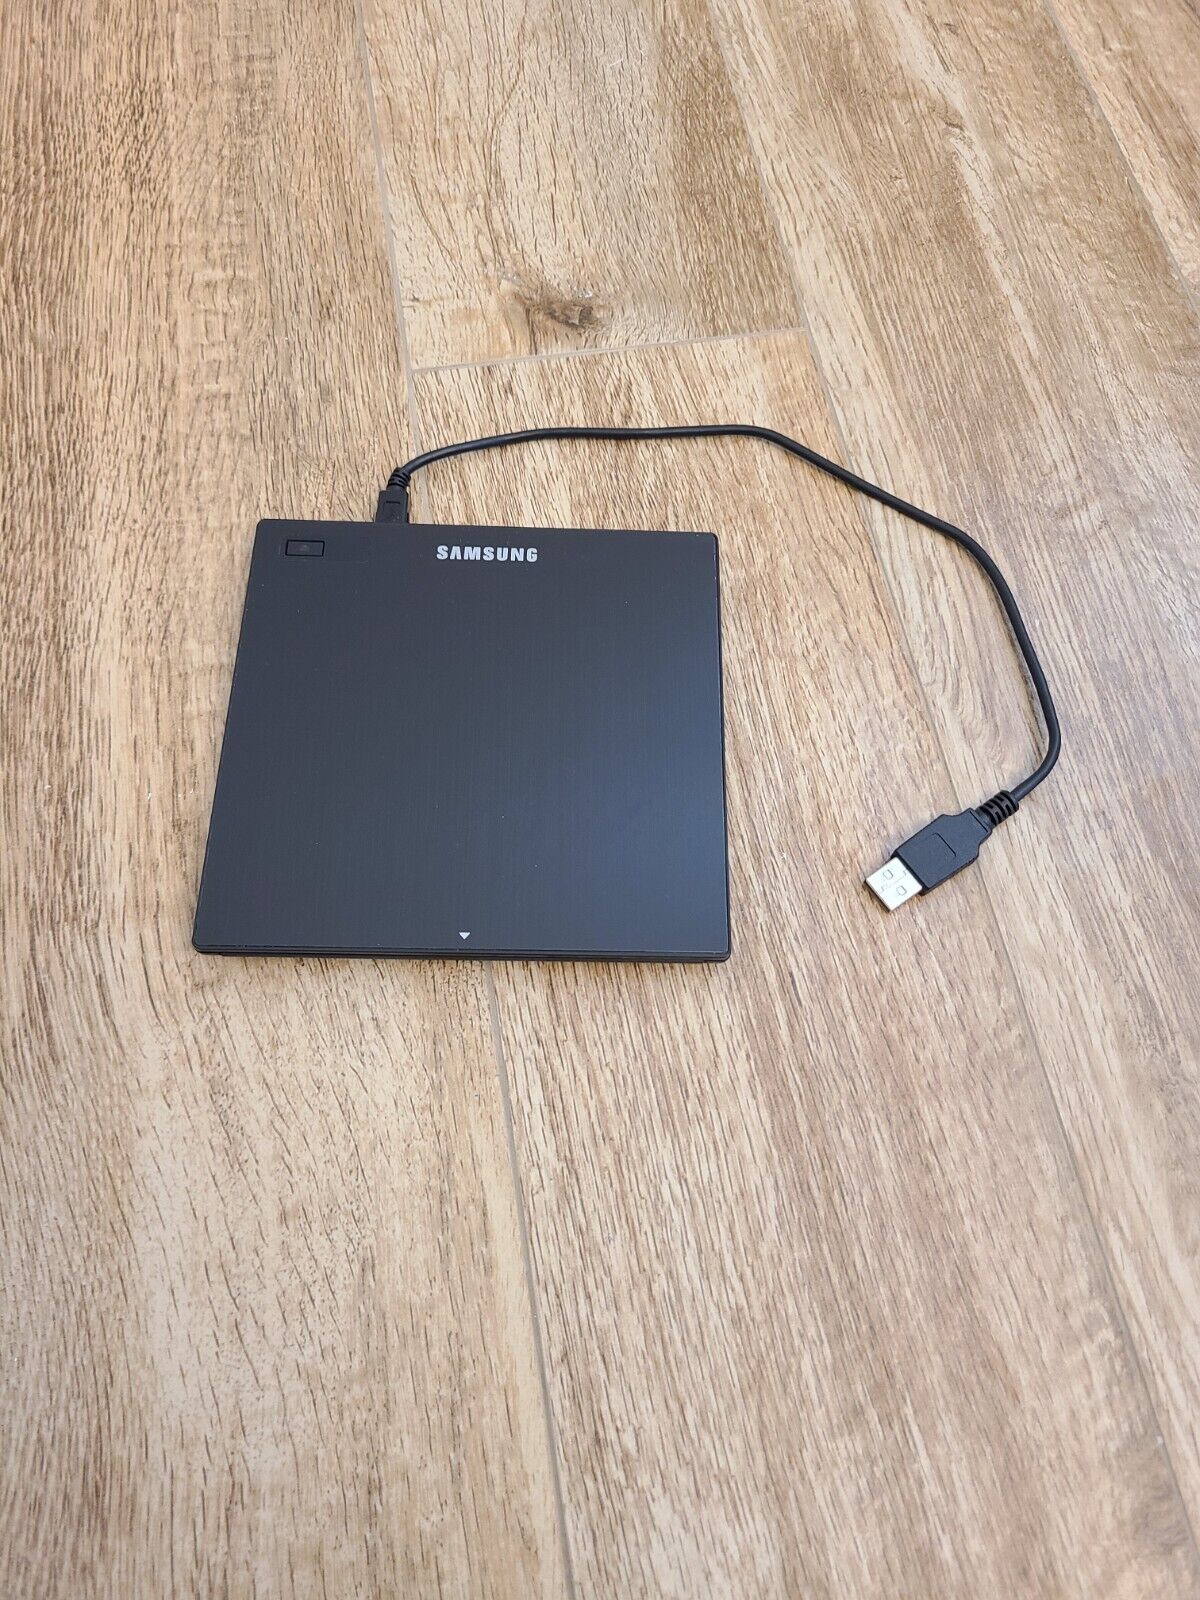 Genuine Samsung SE-208 Slim Portable DVD Writer - External